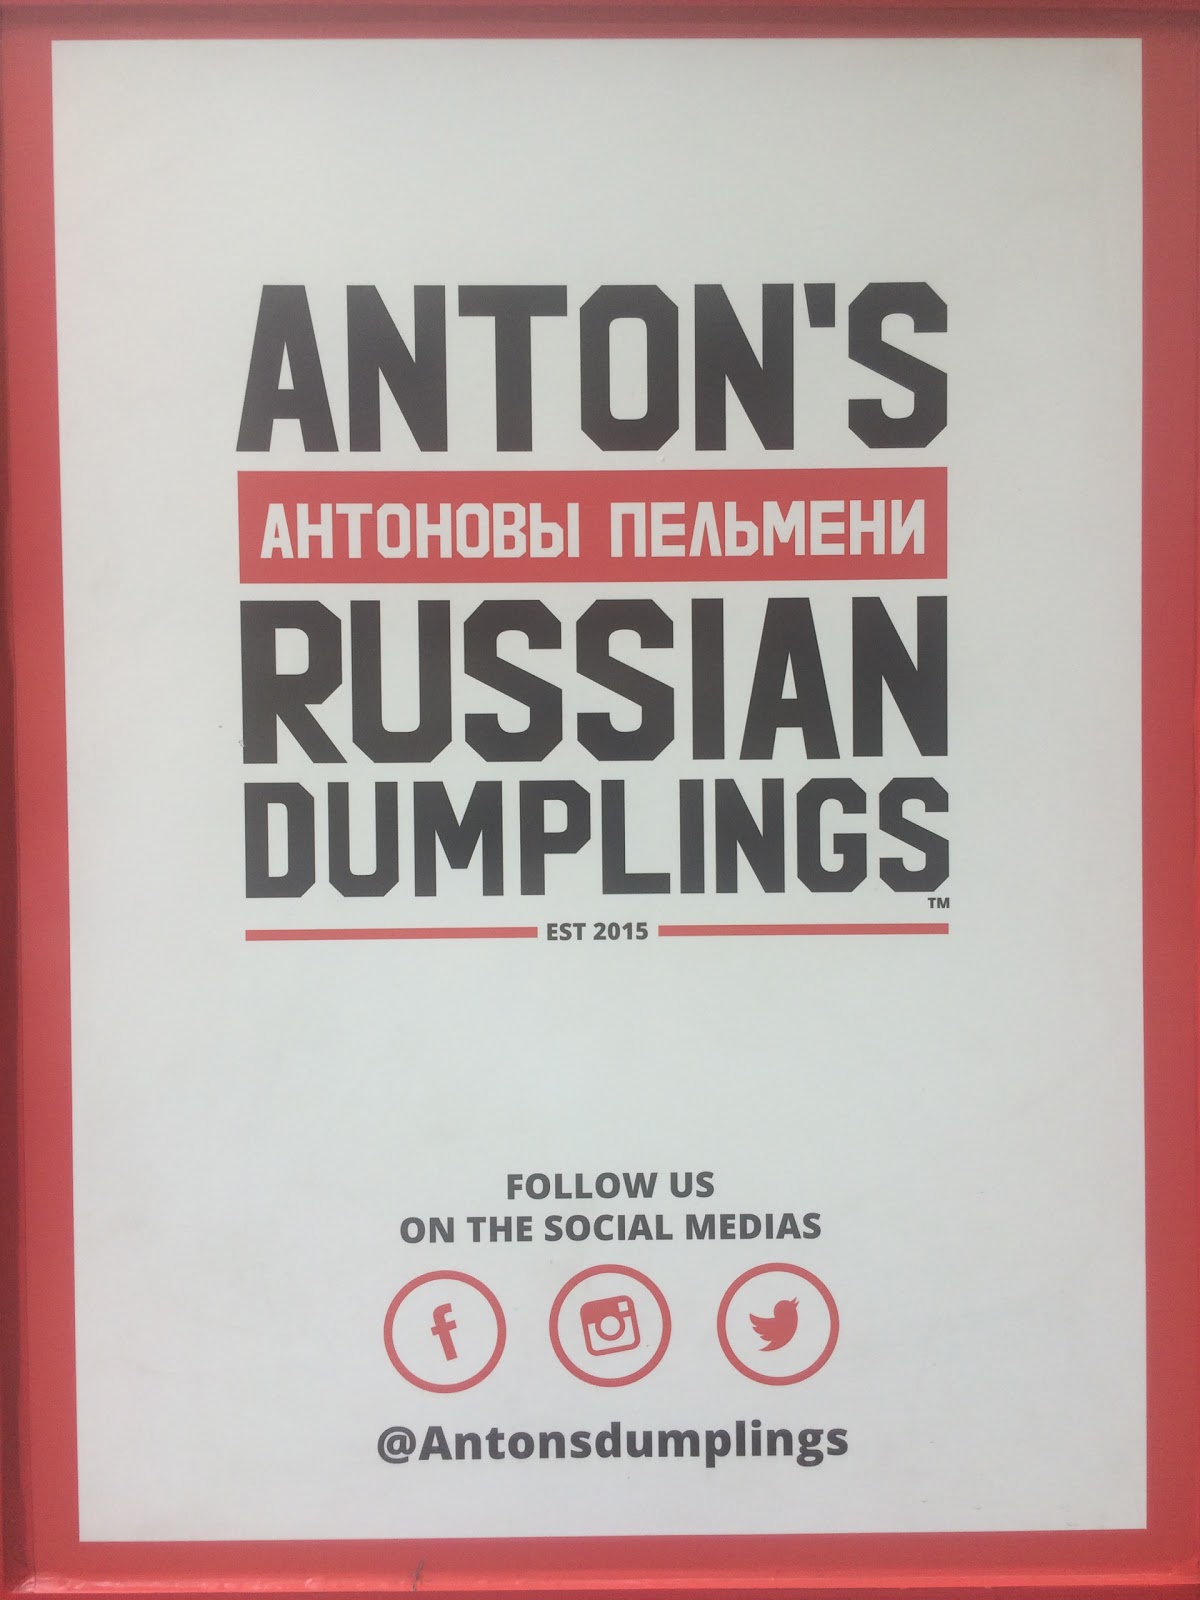 Photo of Anton's Dumplings in New York City, New York, United States - 4 Picture of Restaurant, Food, Point of interest, Establishment